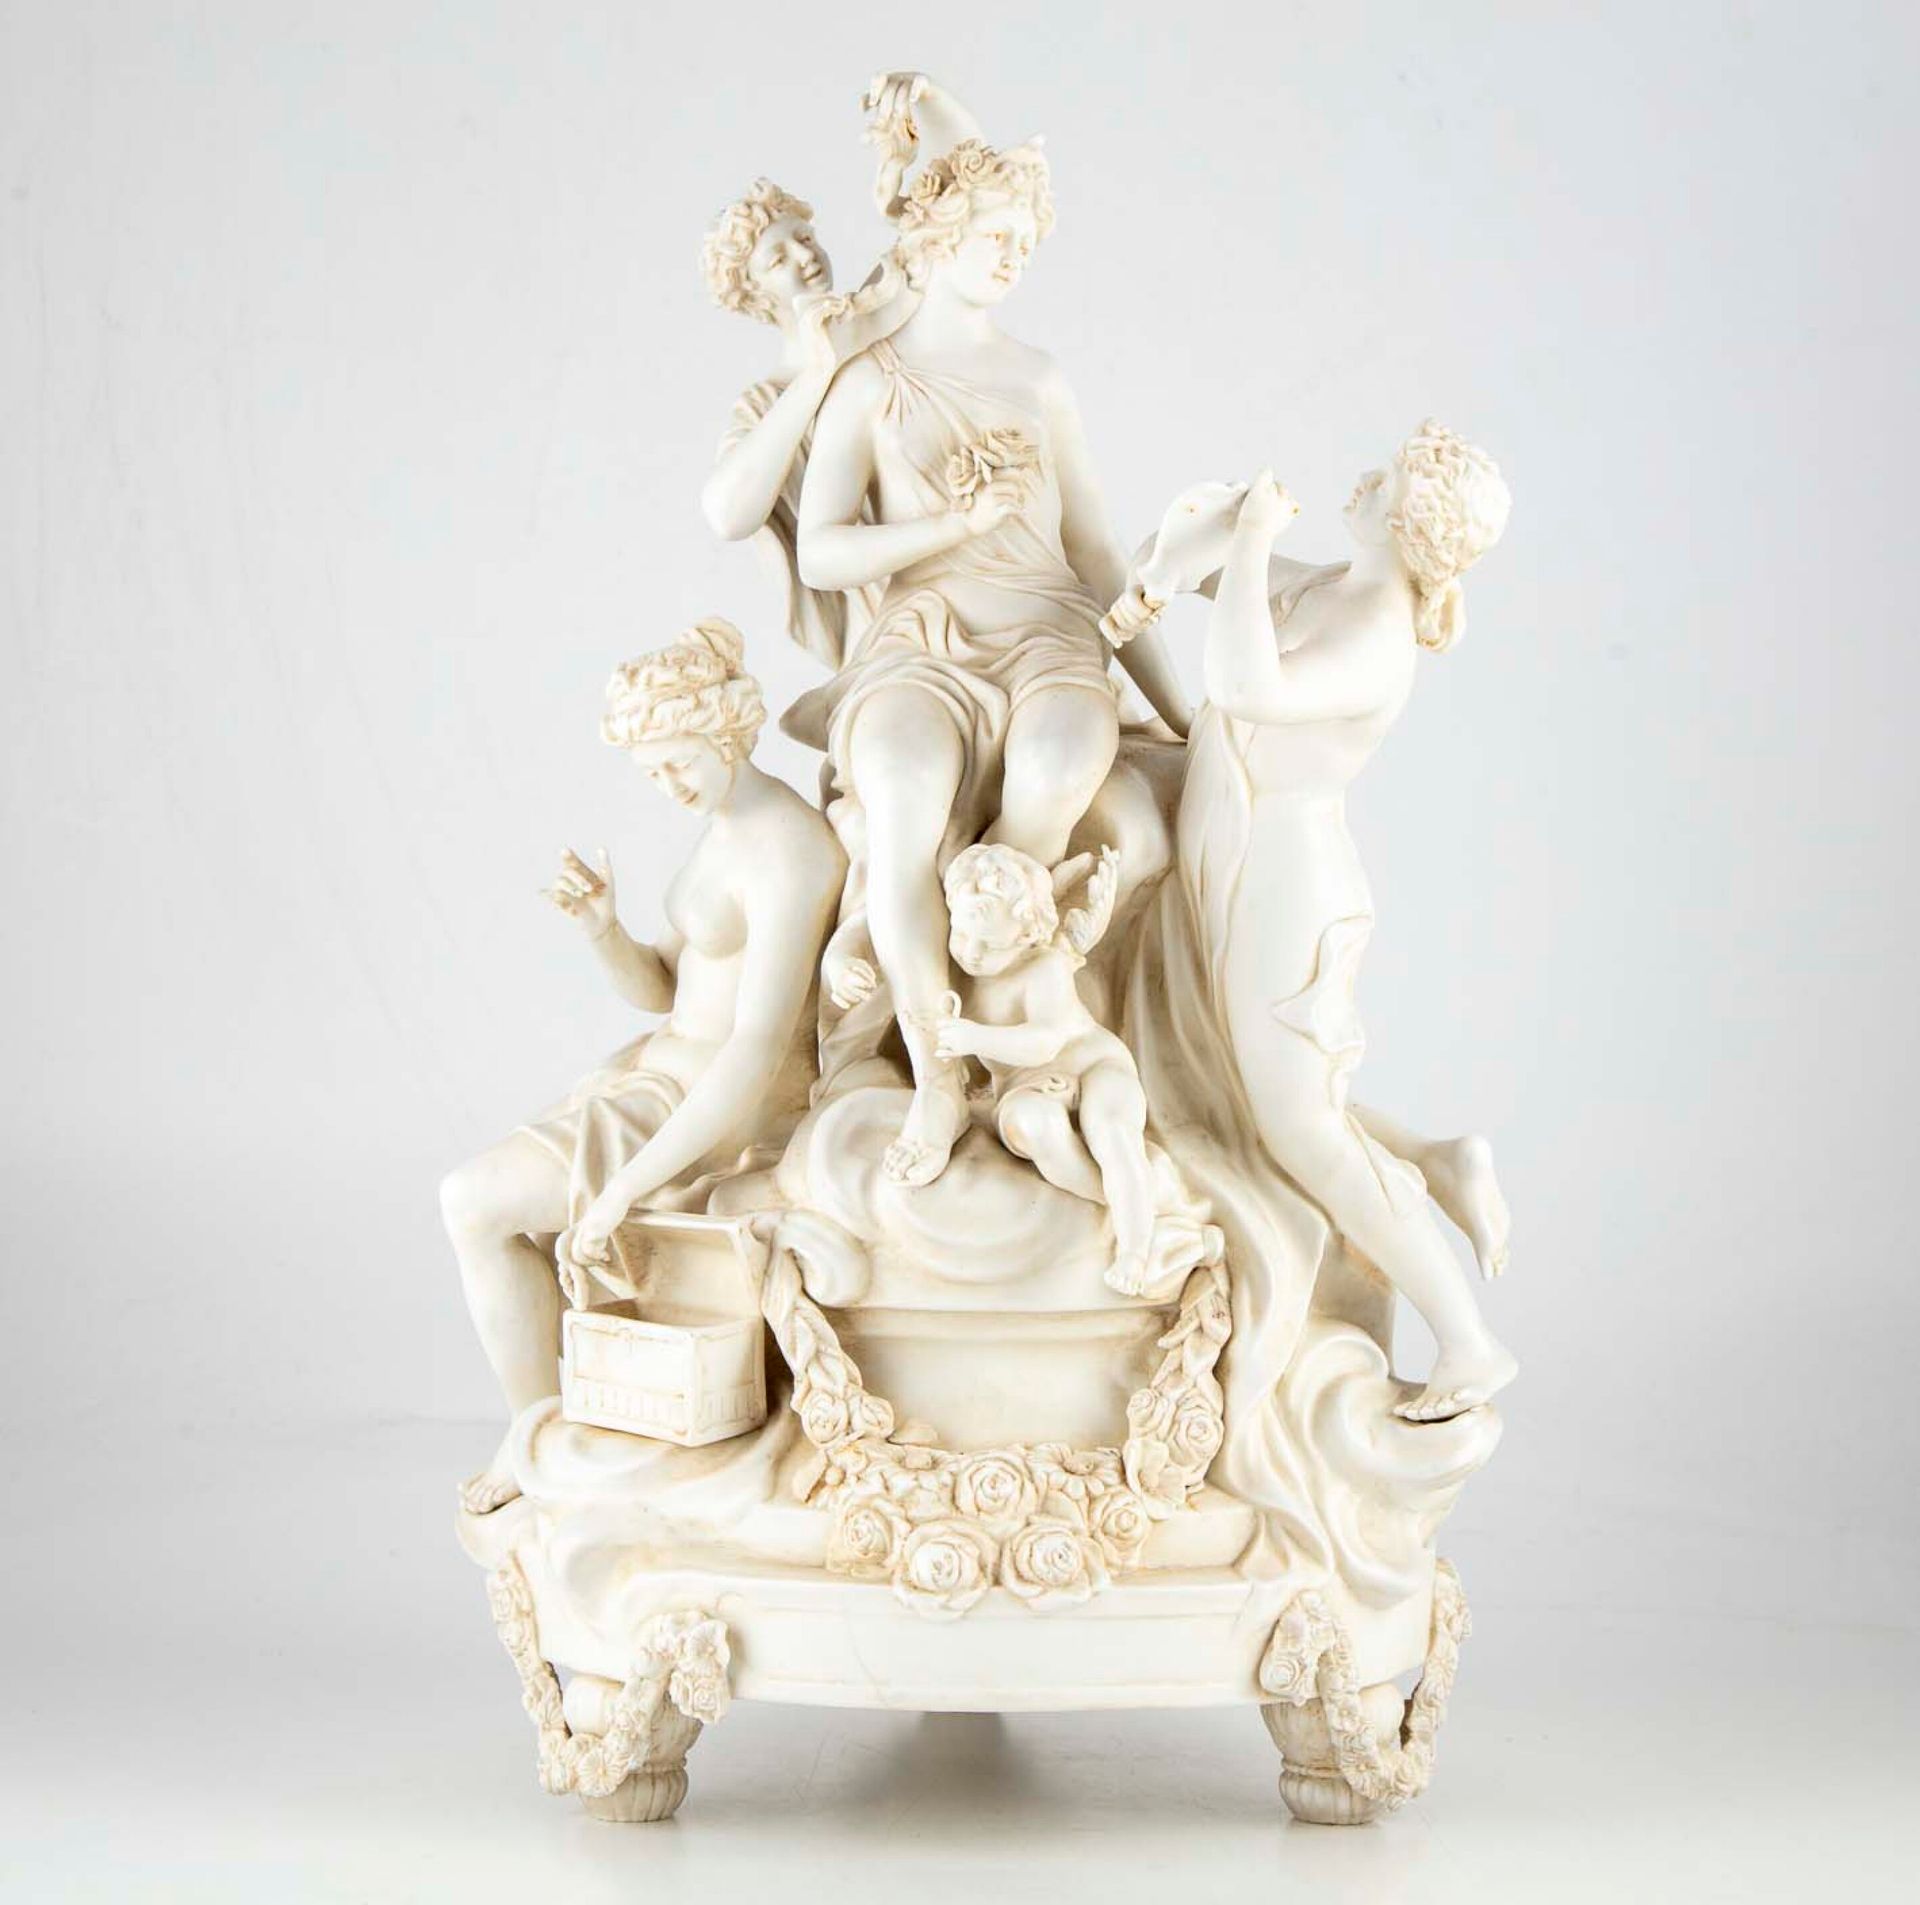 LOUIS SIMON BOIZOT 仿照路易-西蒙-博伊佐特（1743-1809）的作品

维纳斯的厕所

瓷器饼干组

台阶下的E&A MÜLLER制造标志&hellip;